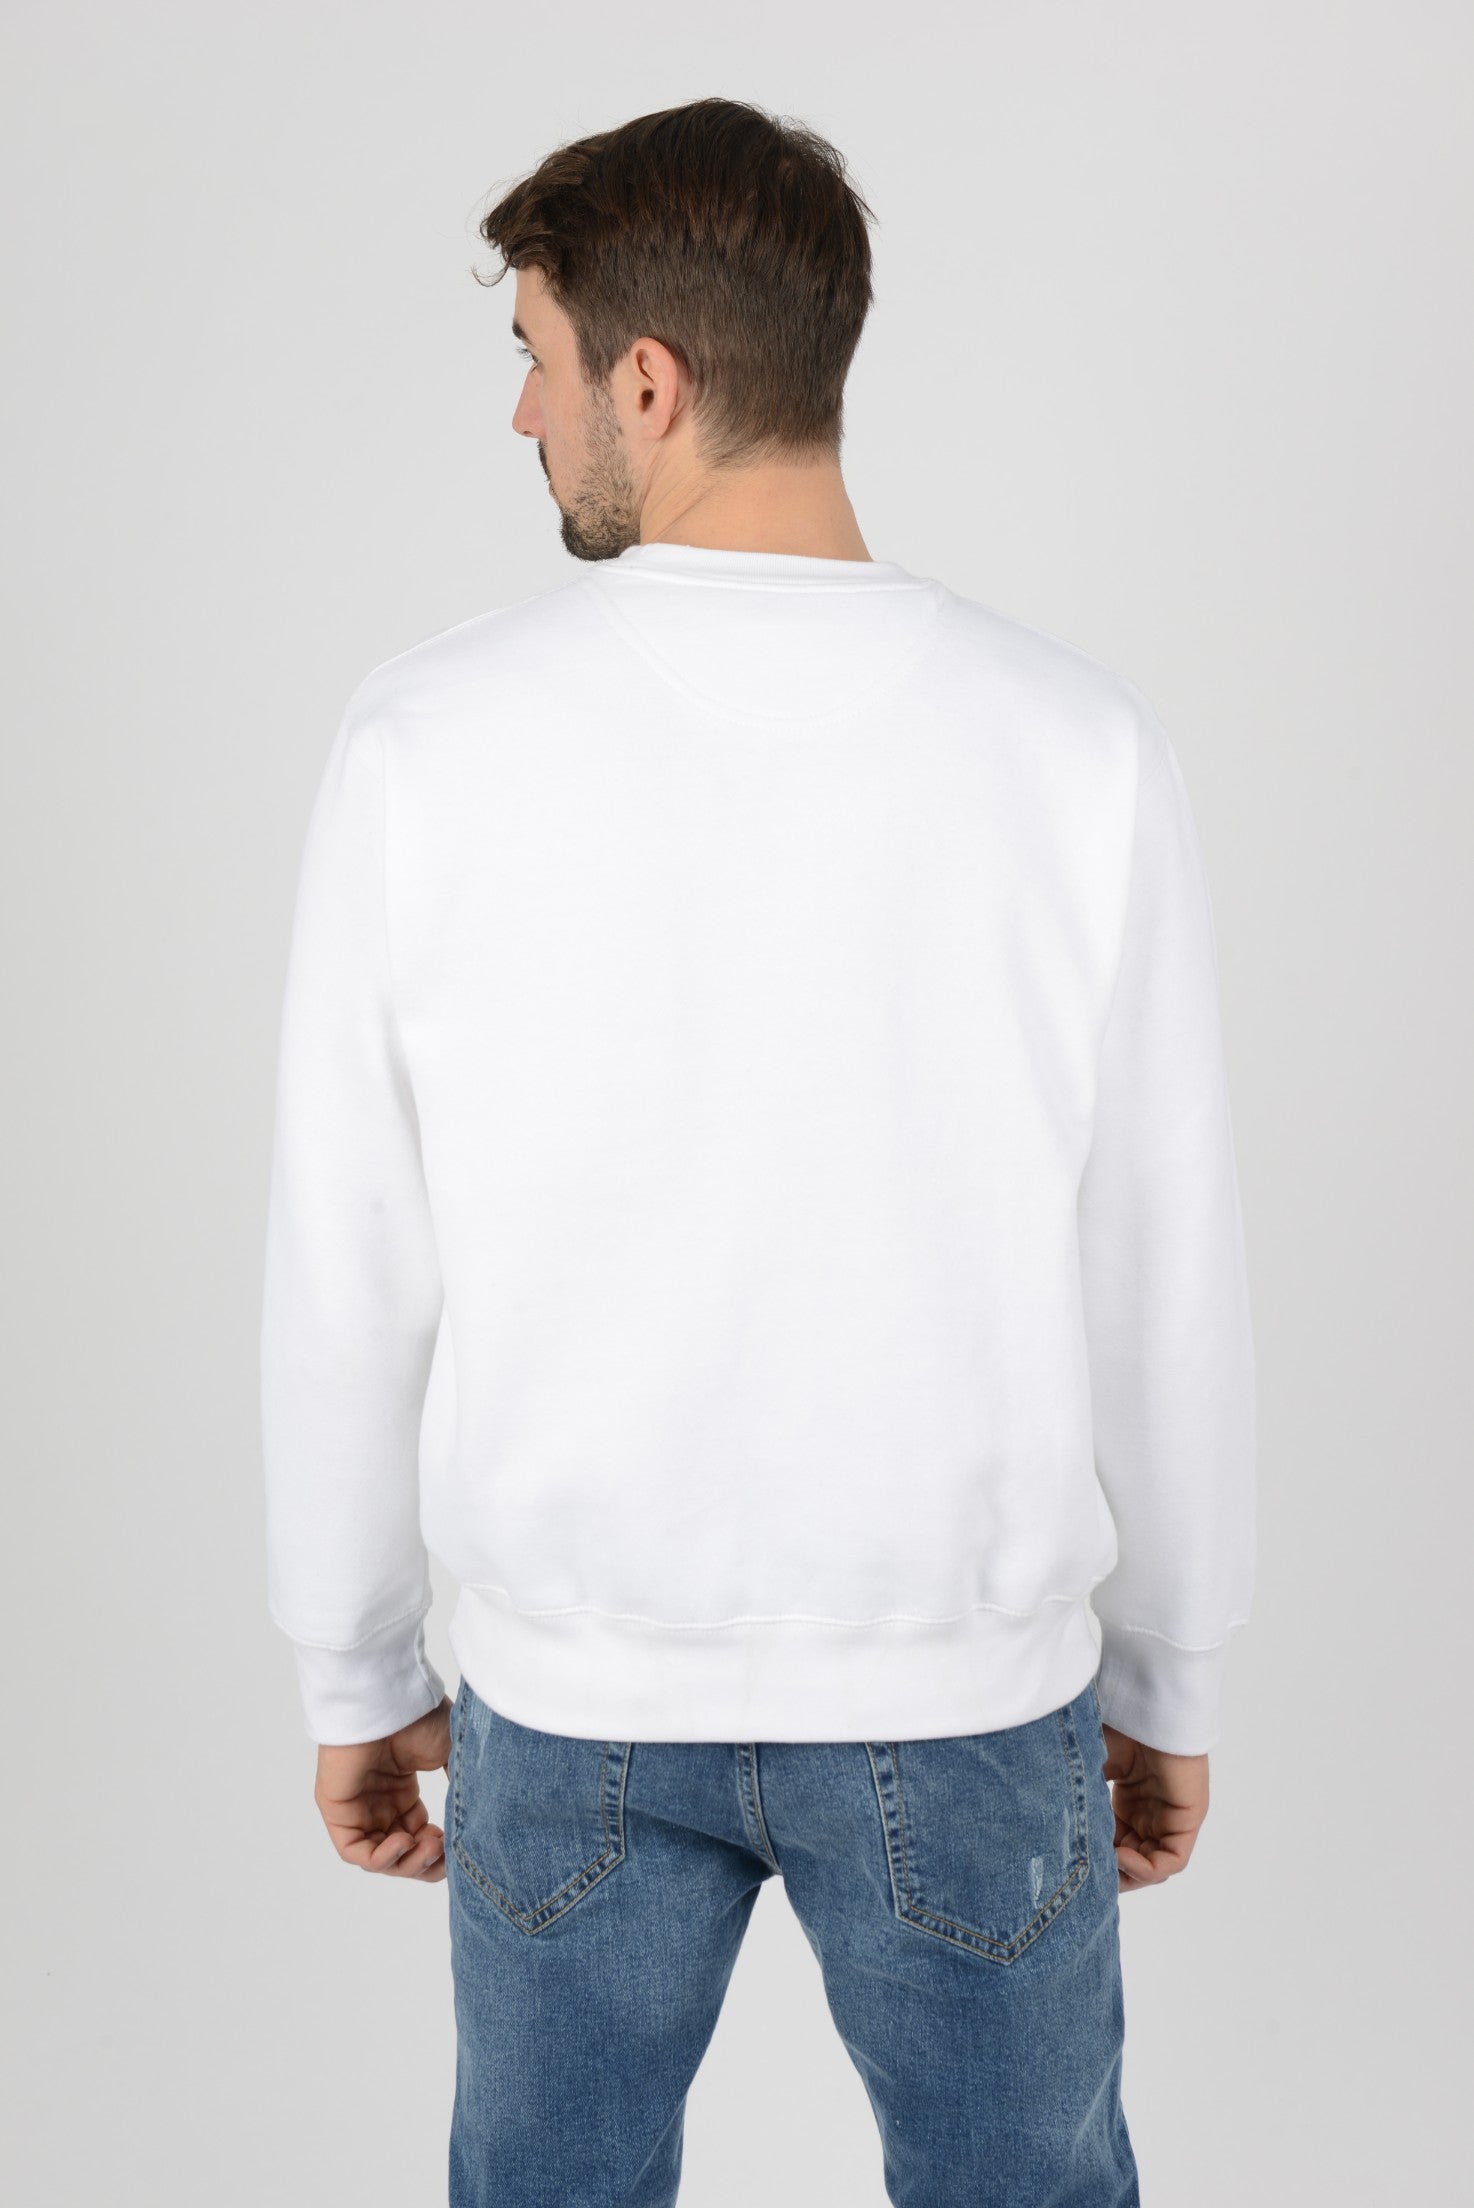 Mens-Plain-Fleece-Sweatshirt-Casual-White